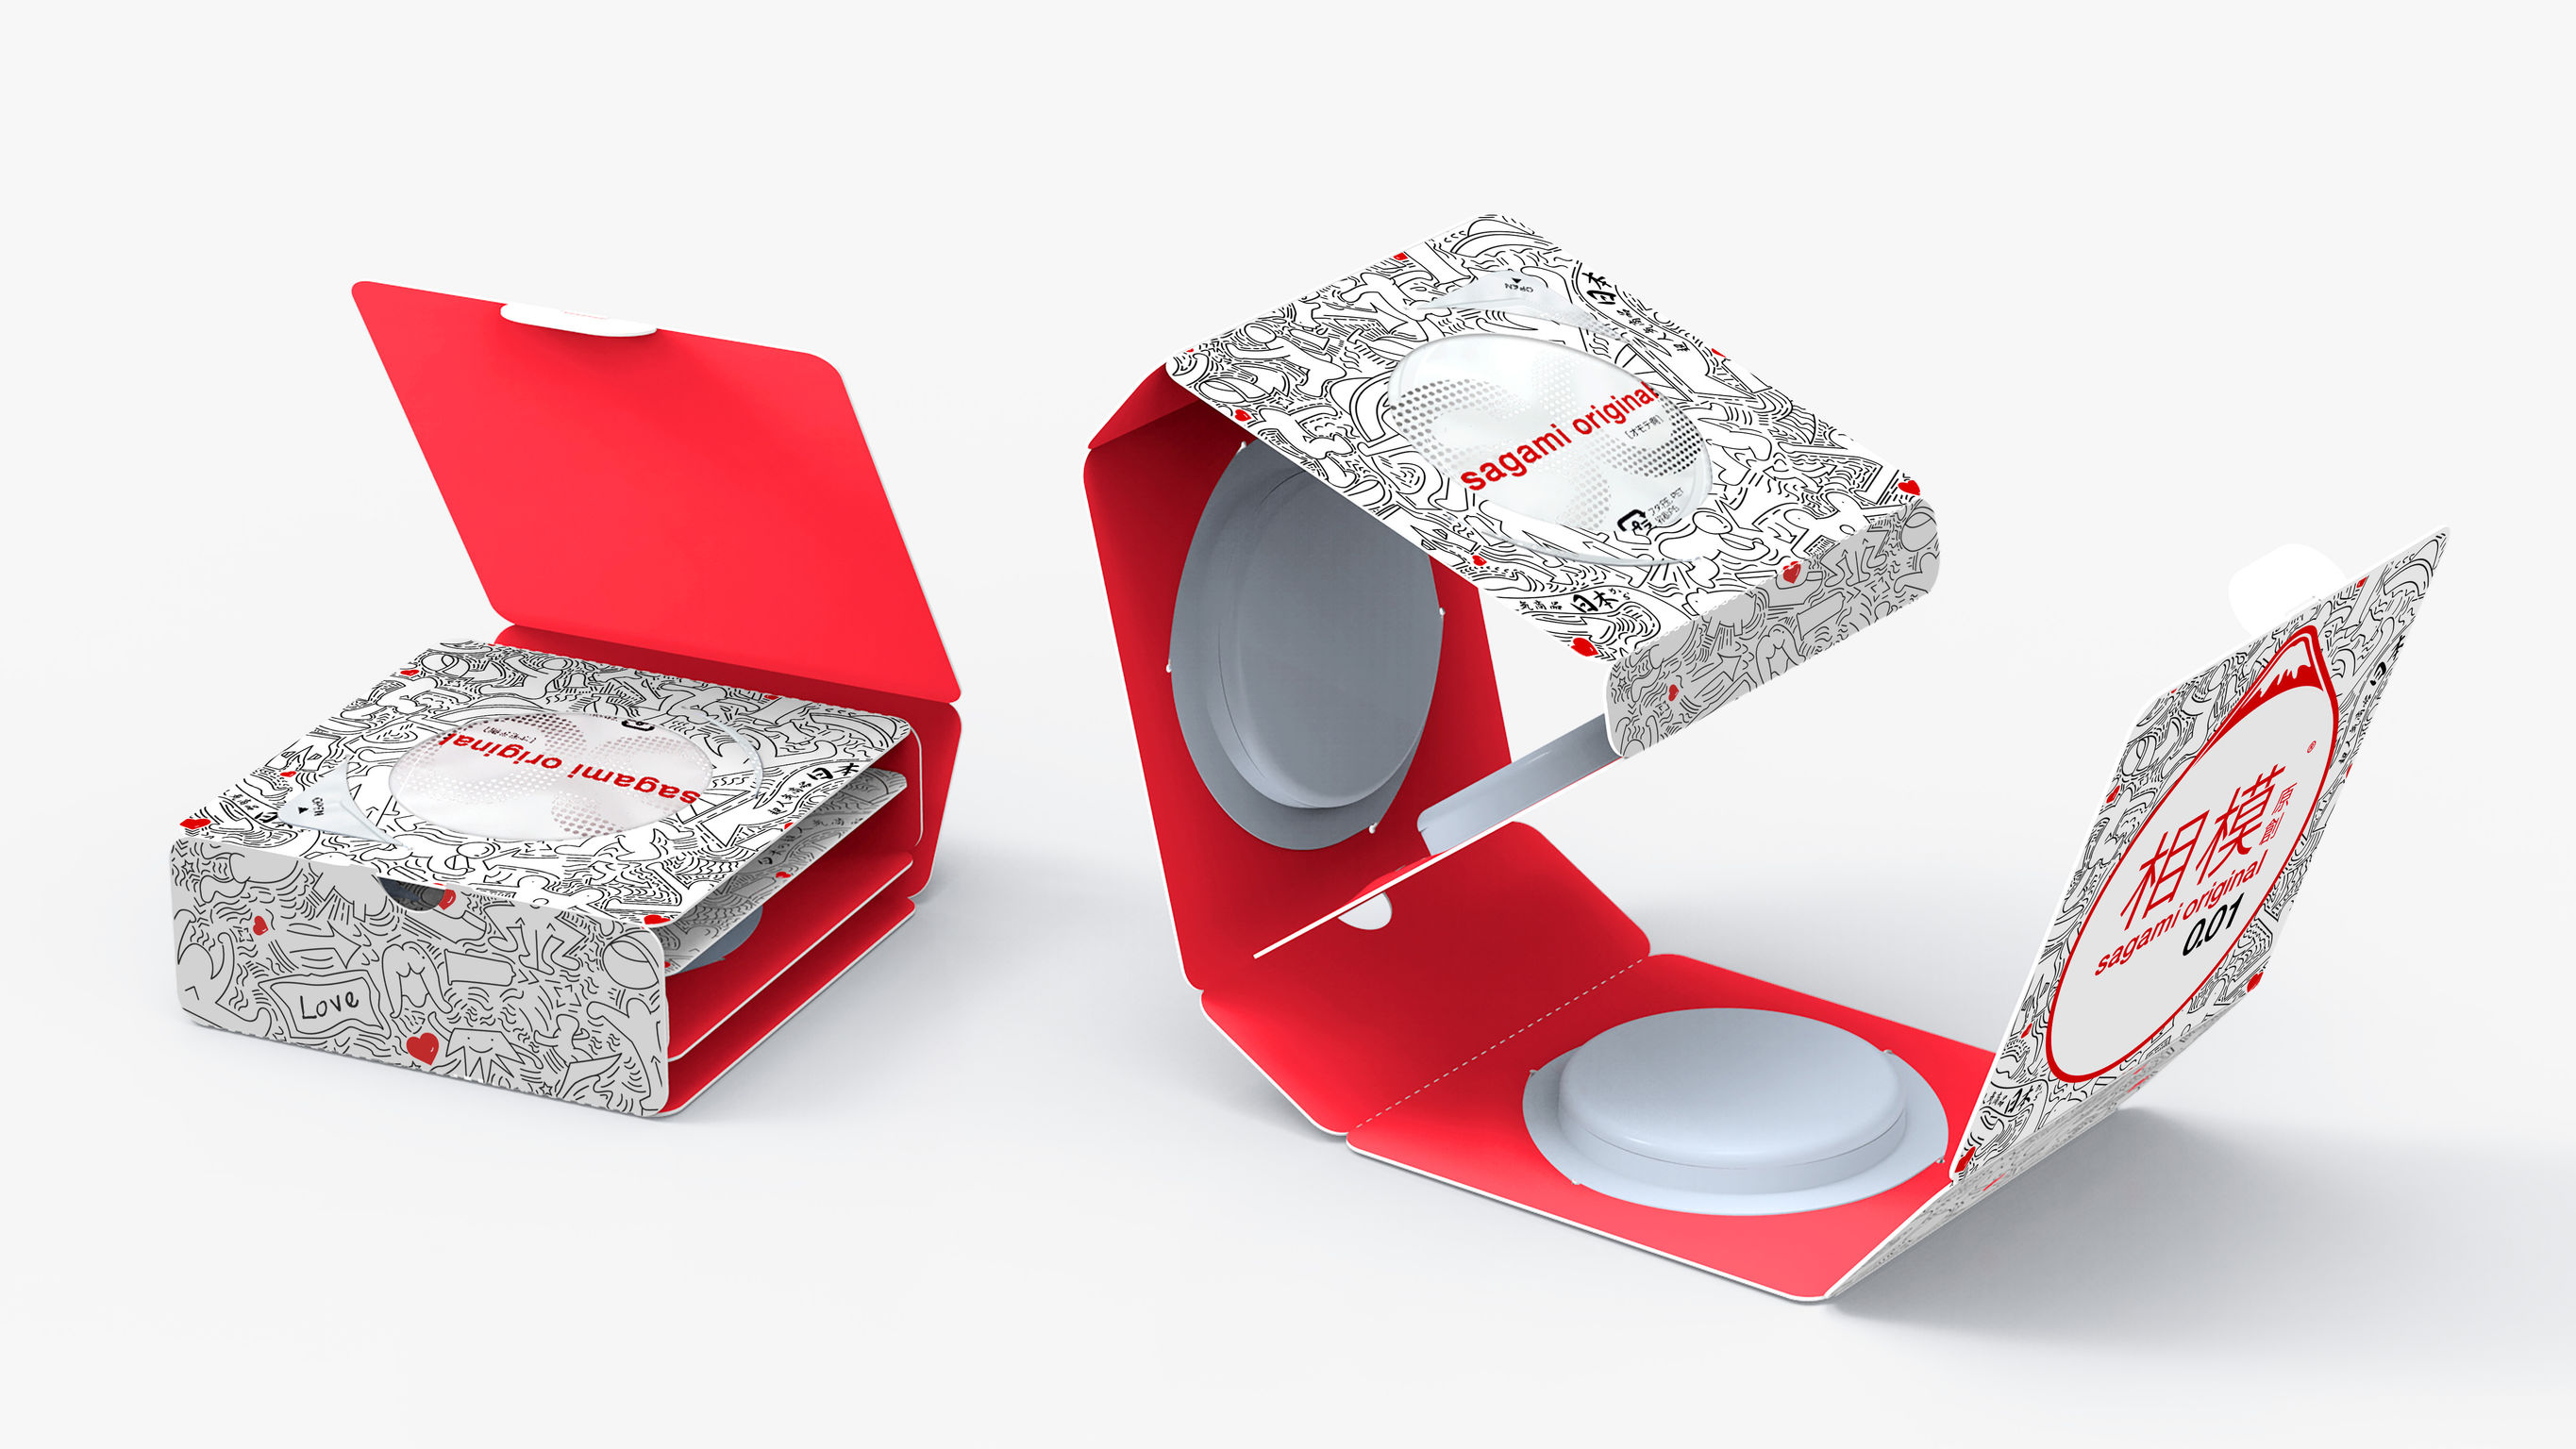 Sagami Original One-paper Condom Packaging